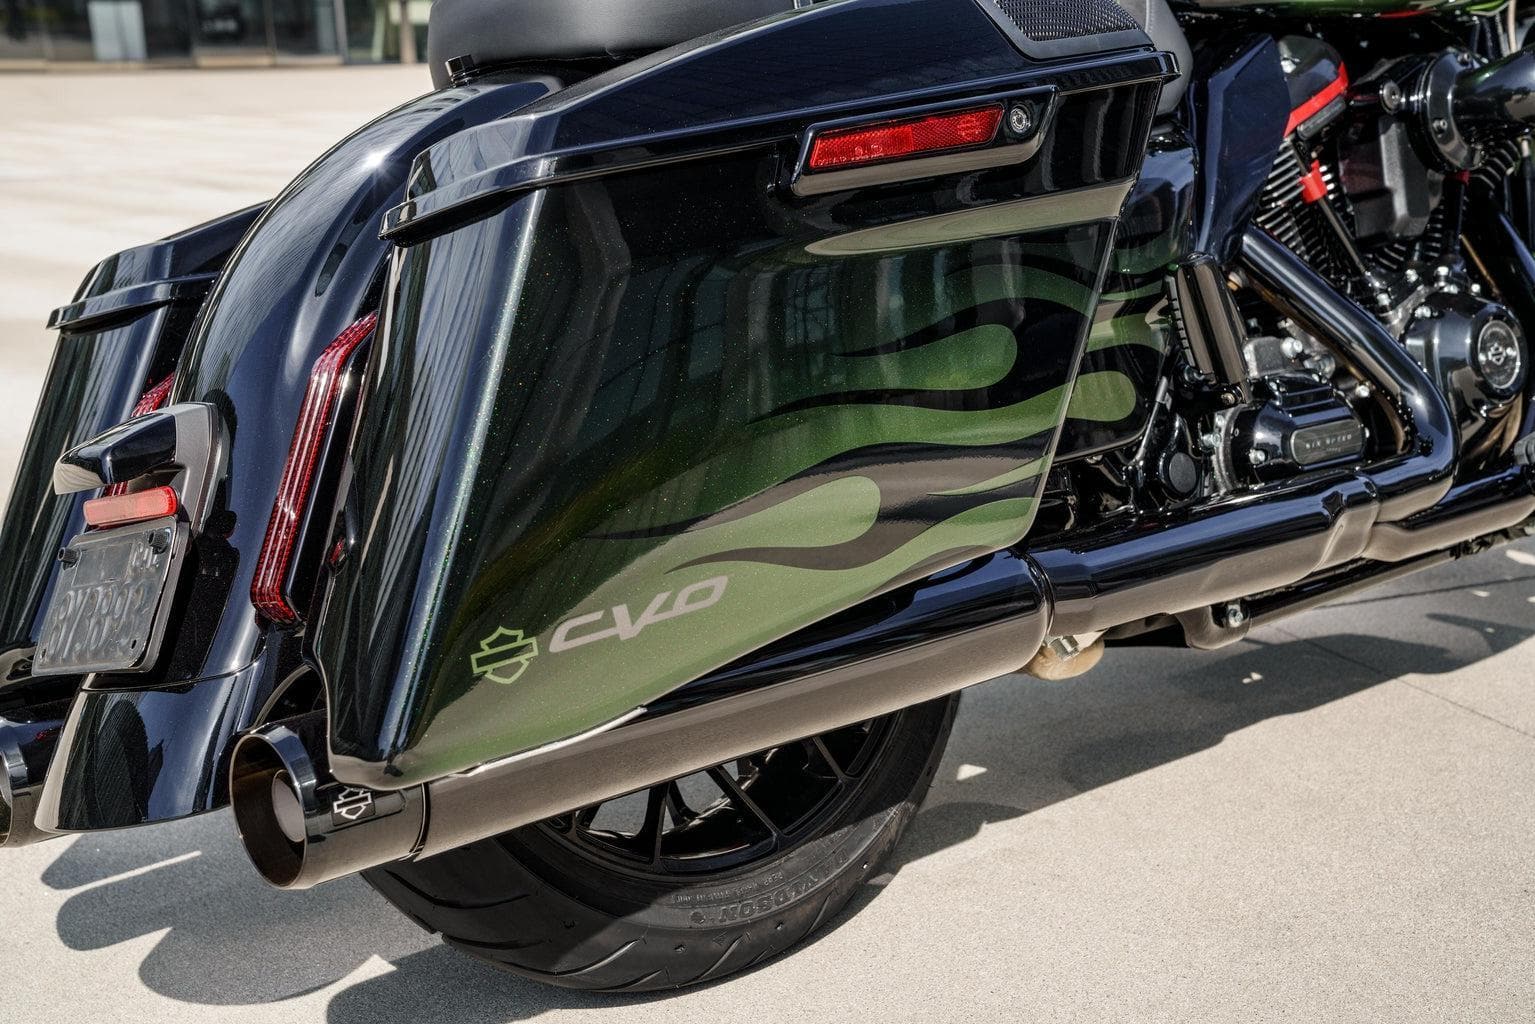 Buy 2022 Harley-Davidson Cvo Street Glide - Rolling Thunder Harley-Davidson